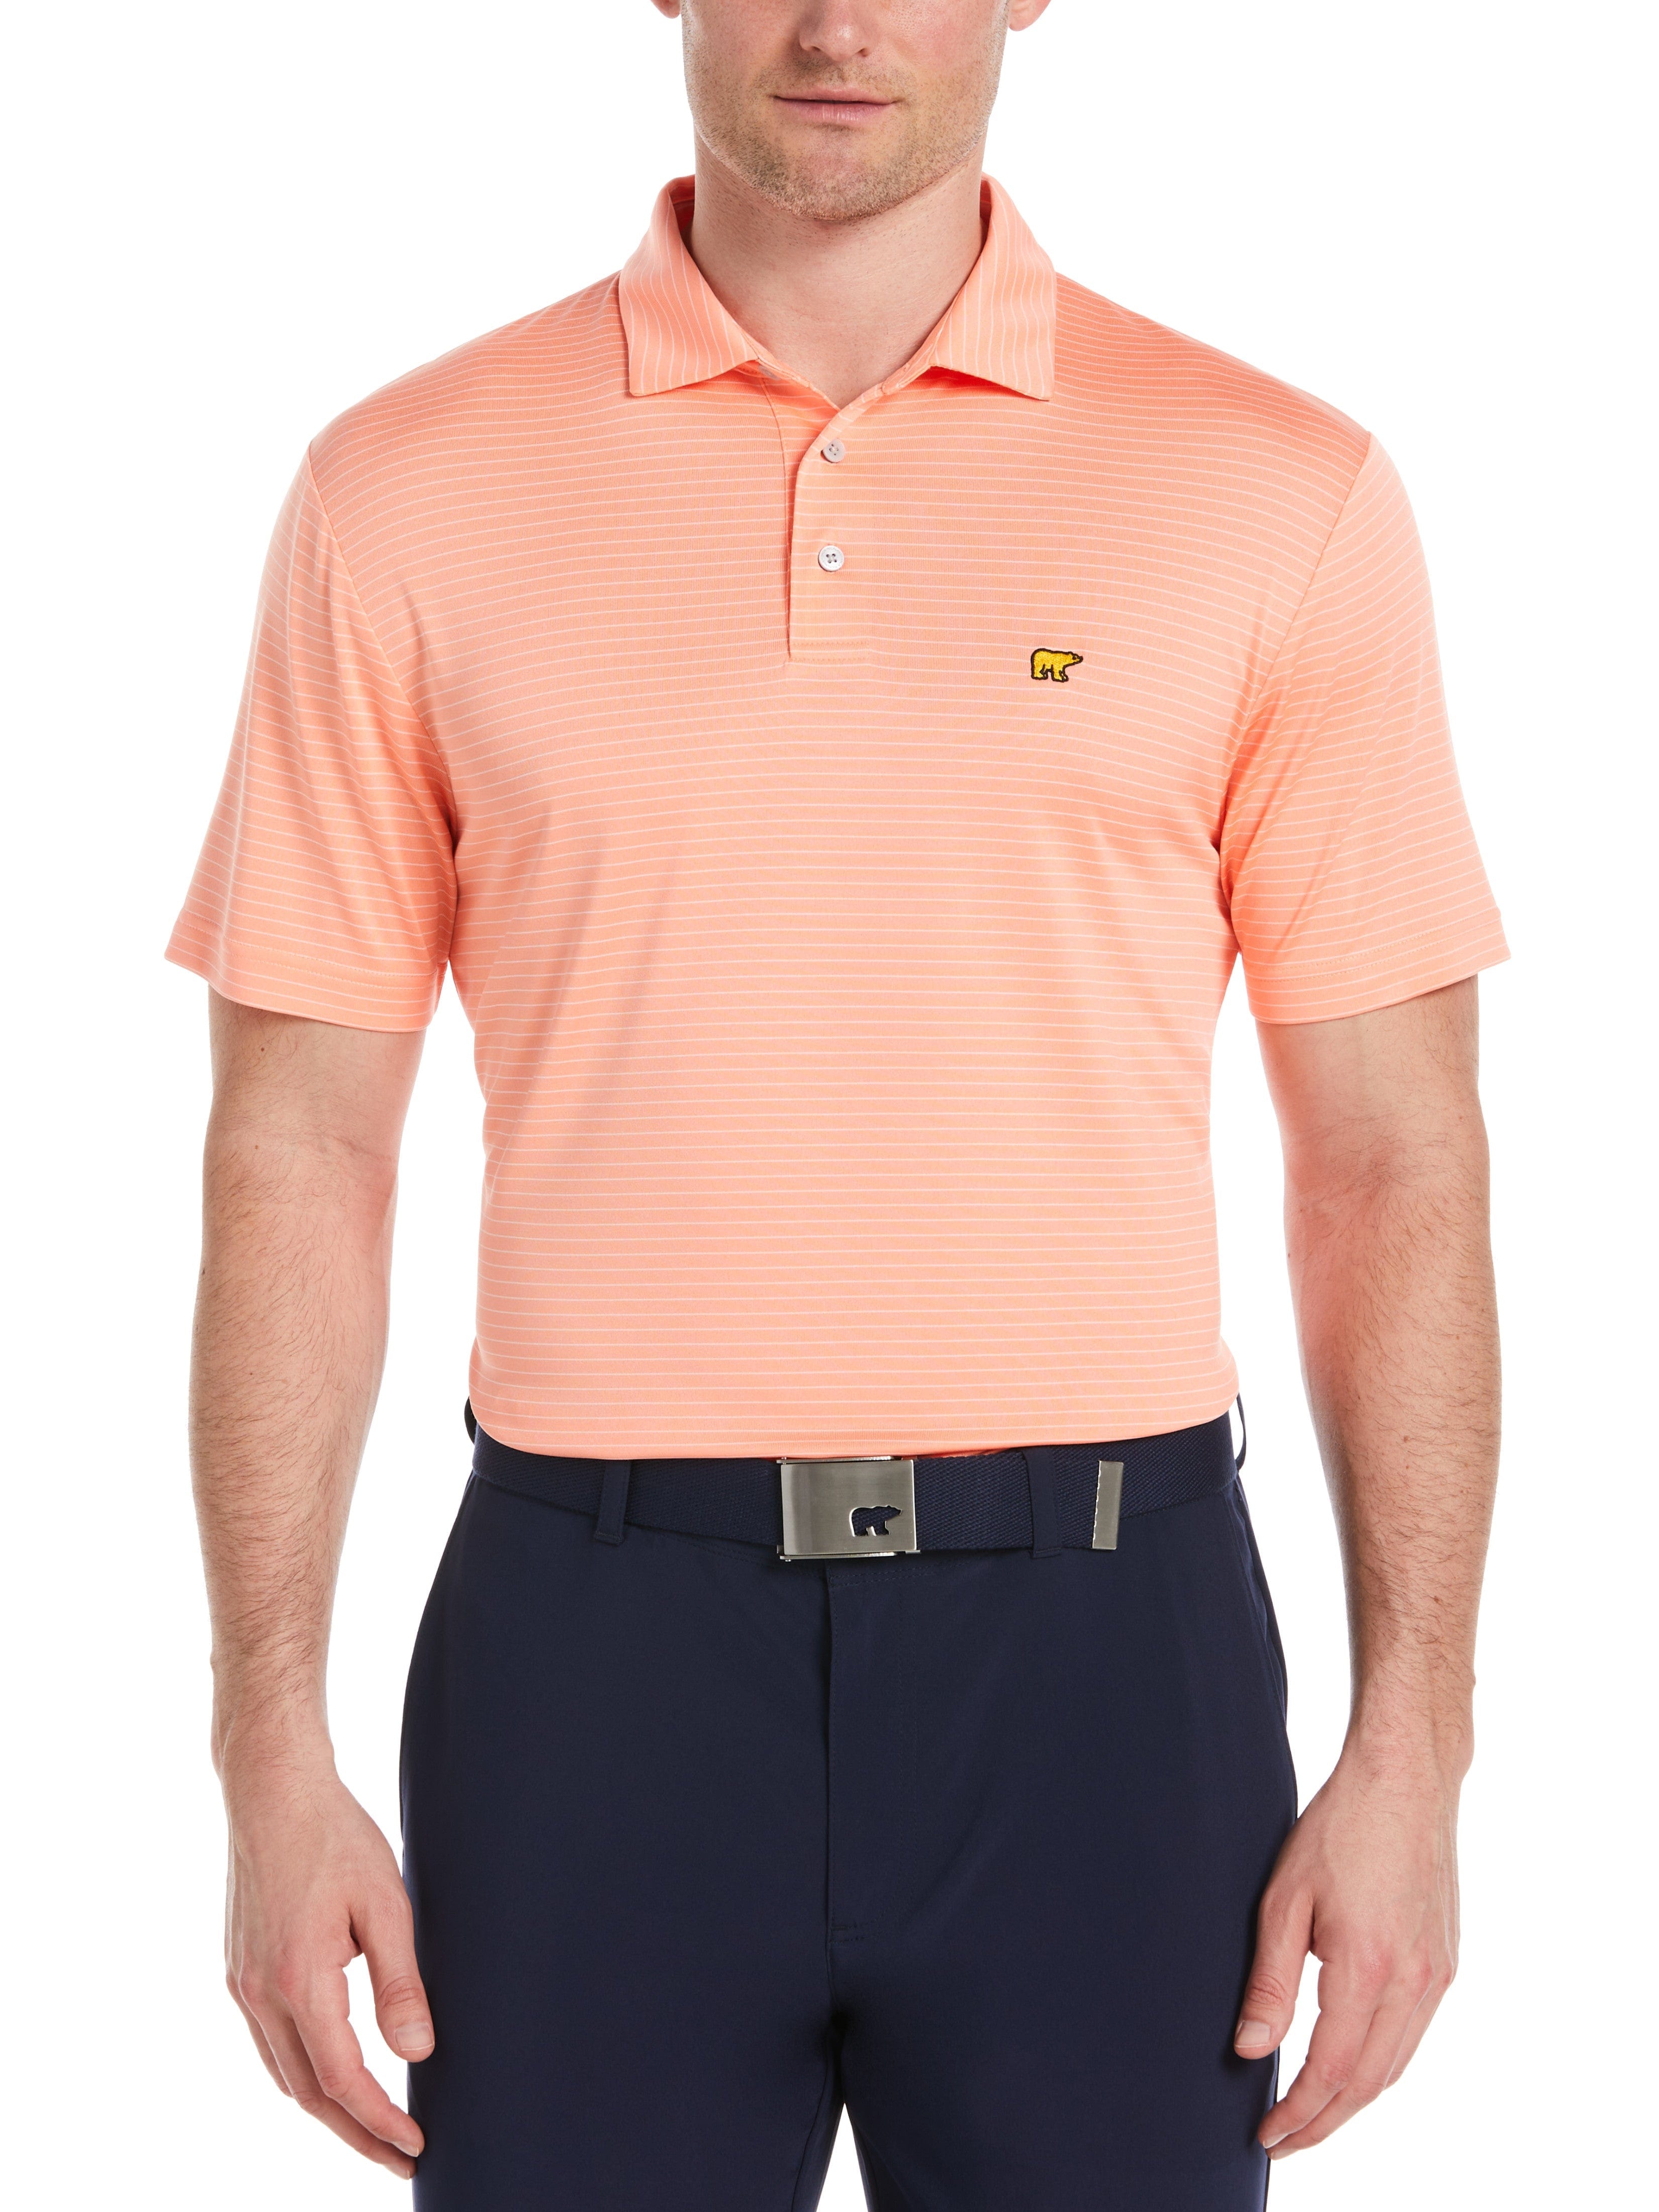 Jack Nicklaus Mens Two Color Stripe Golf Polo Shirt, Size Large, Desert Flower Pink, 100% Polyester | Golf Apparel Shop